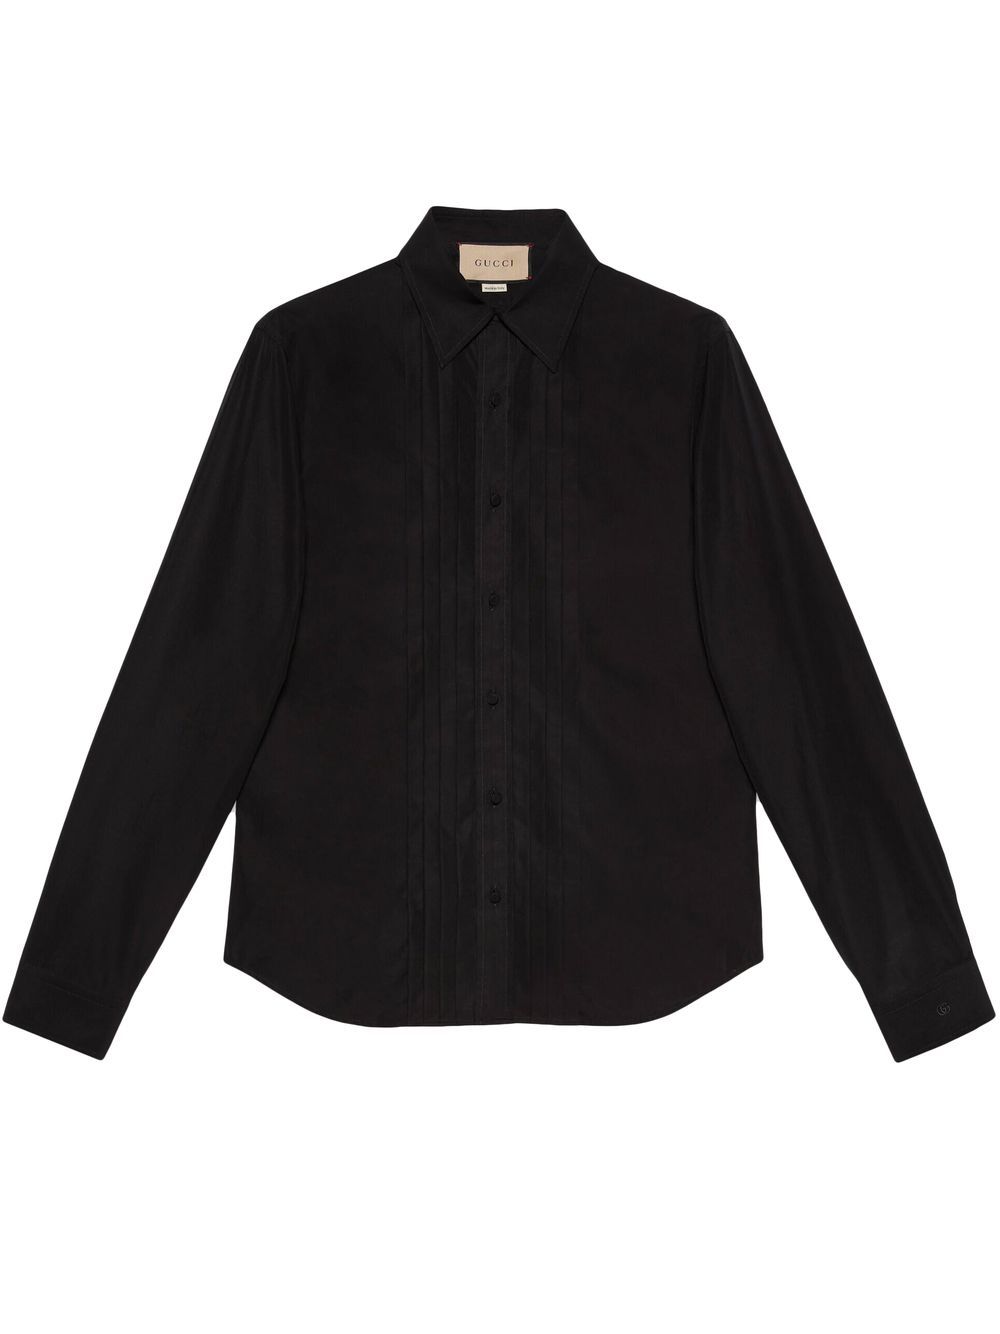 Image 1 of Gucci pleat-front cotton poplin shirt